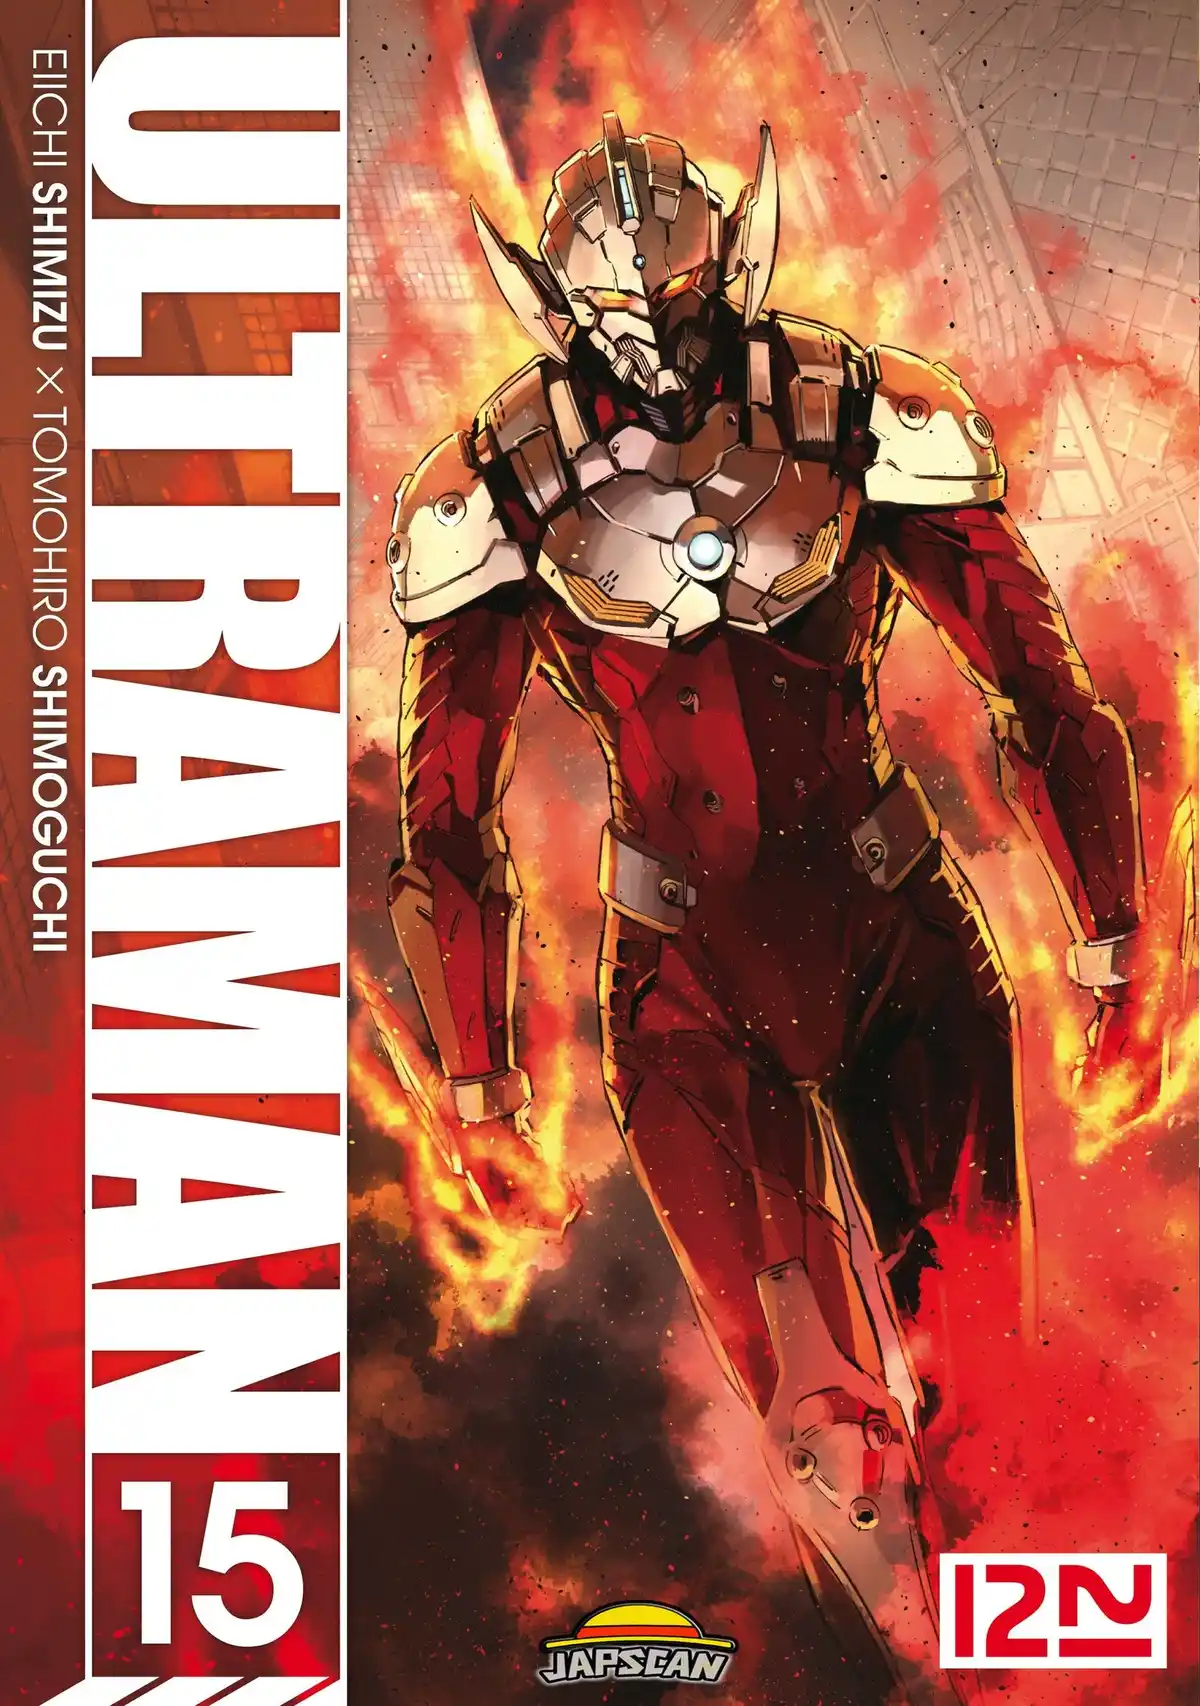 Ultraman Volume 15 page 1